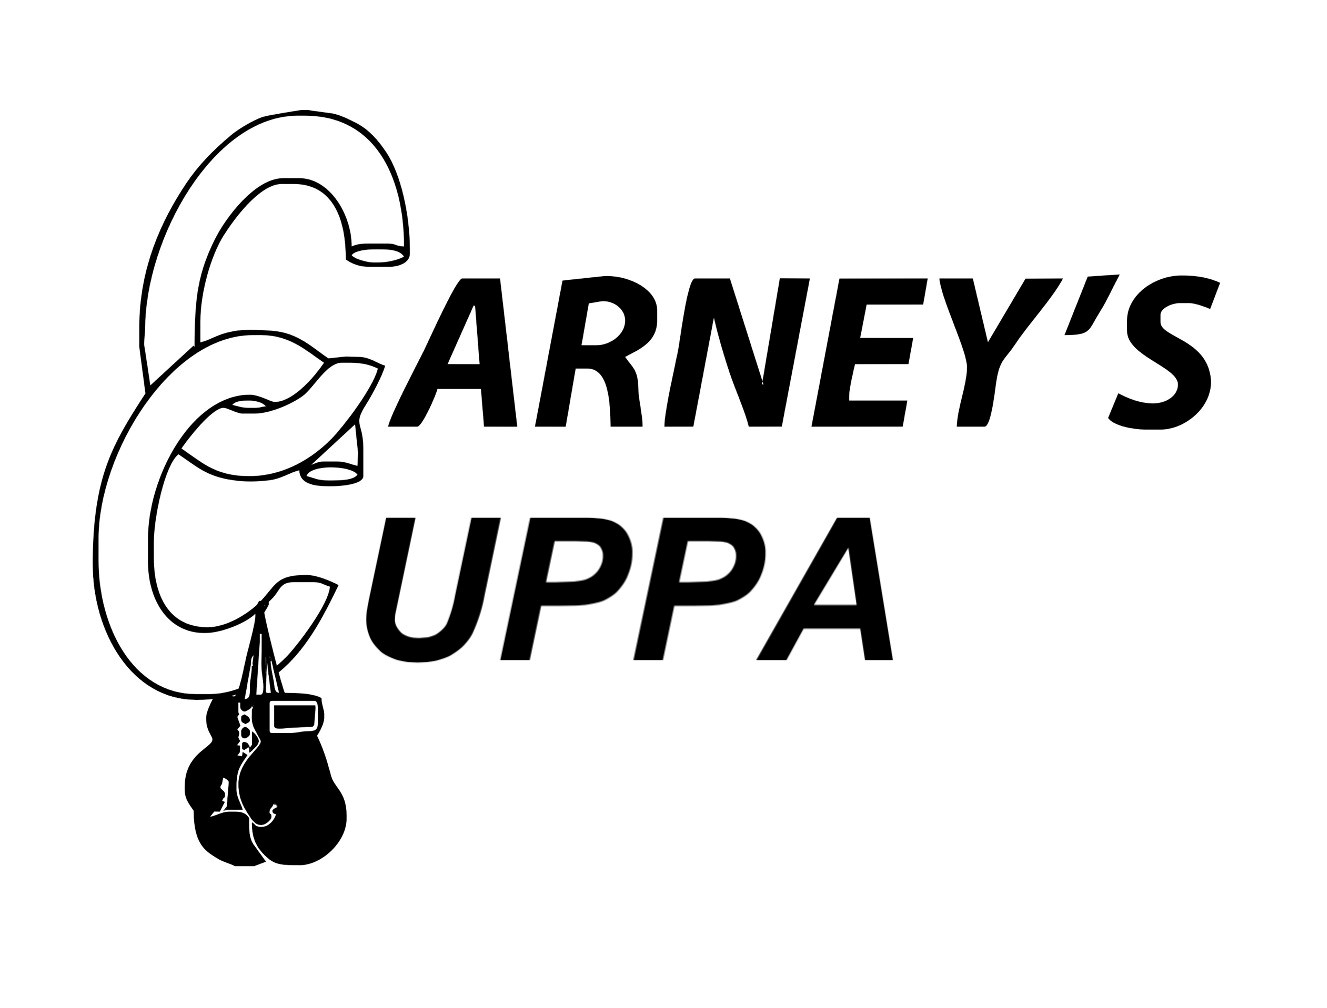 Carney’s Cuppa